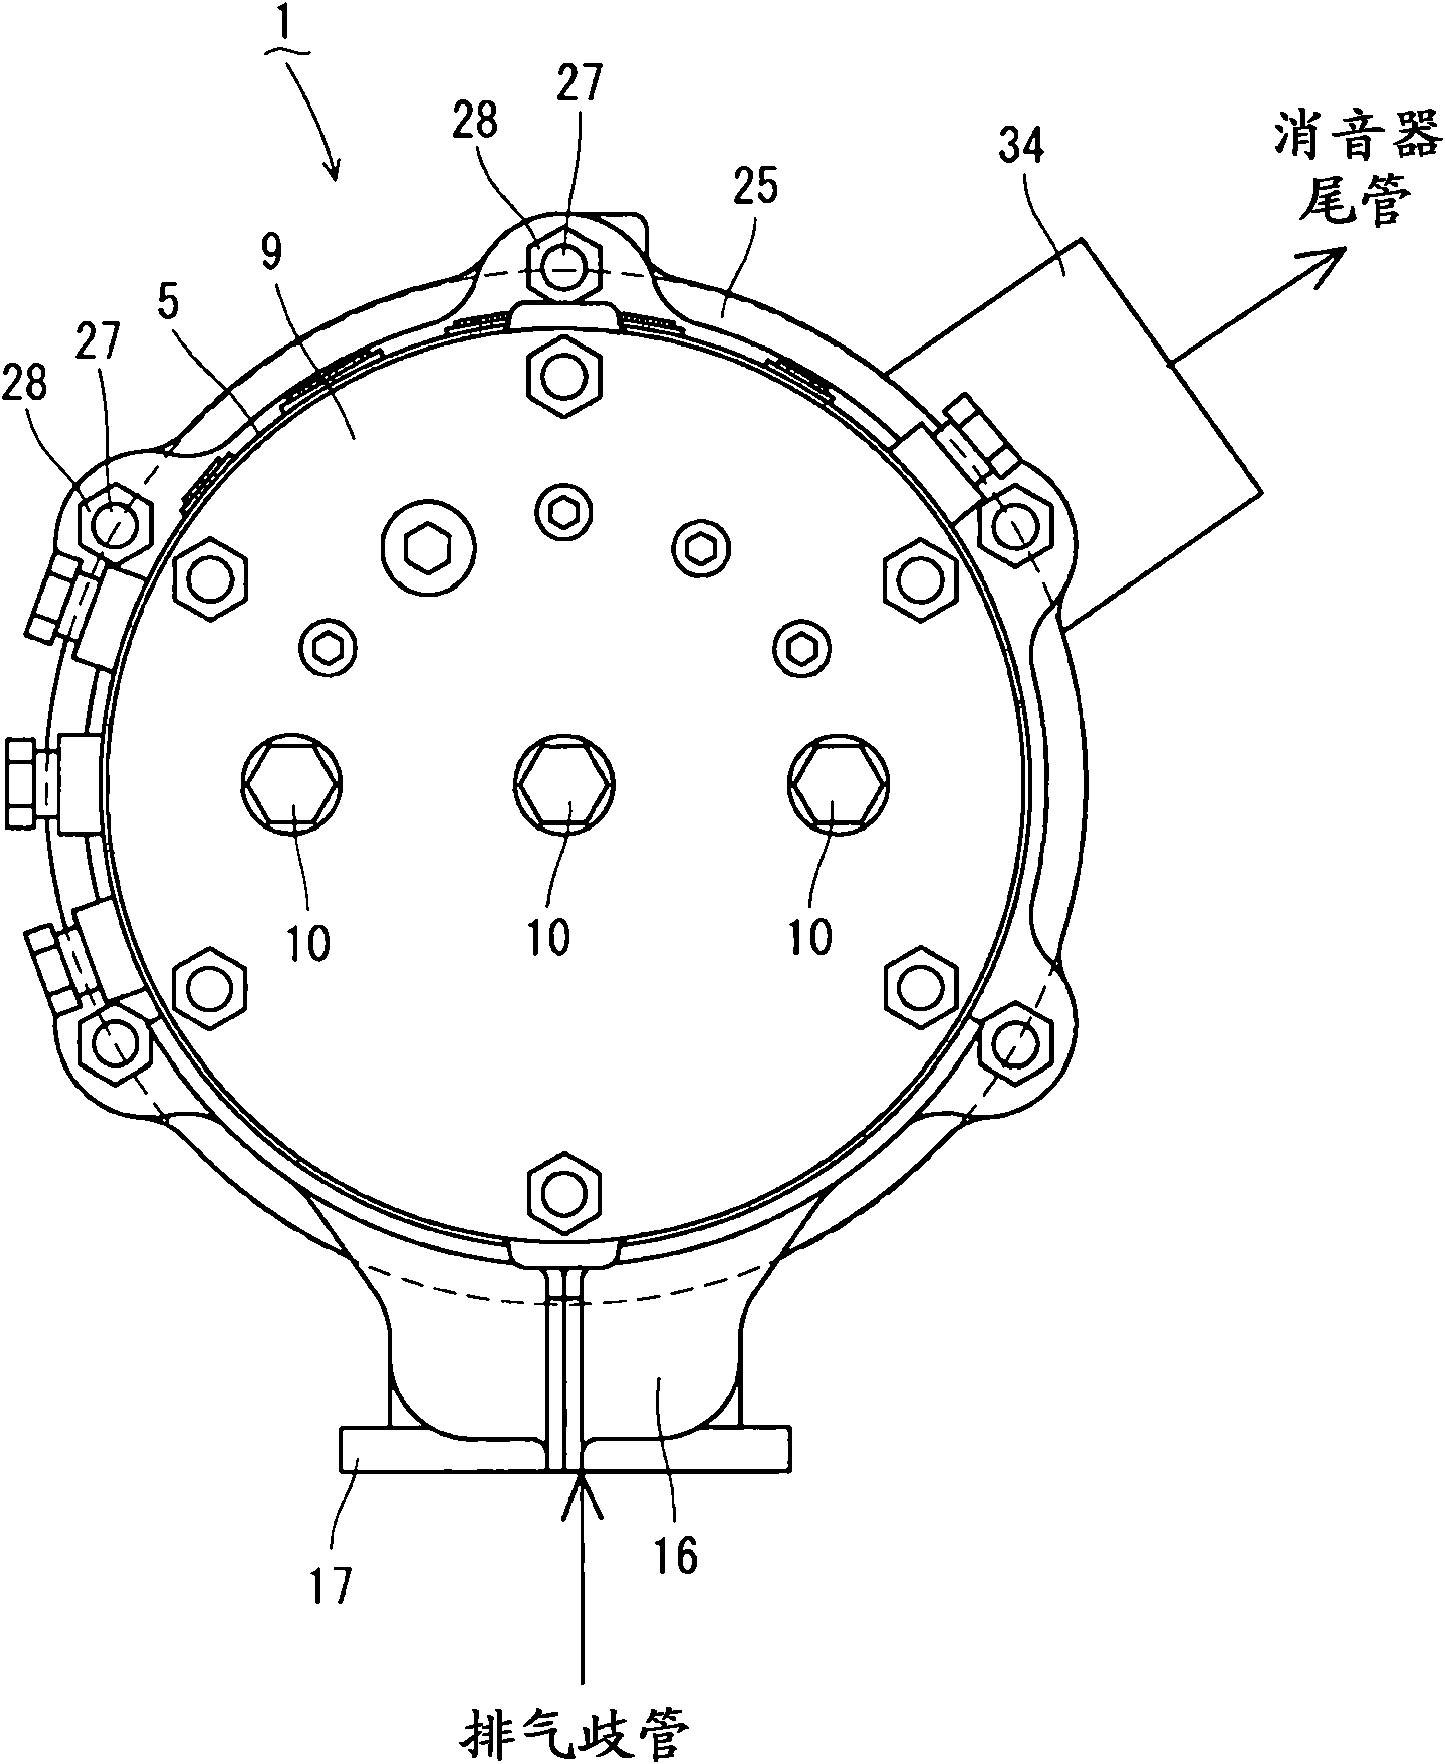 Engine device